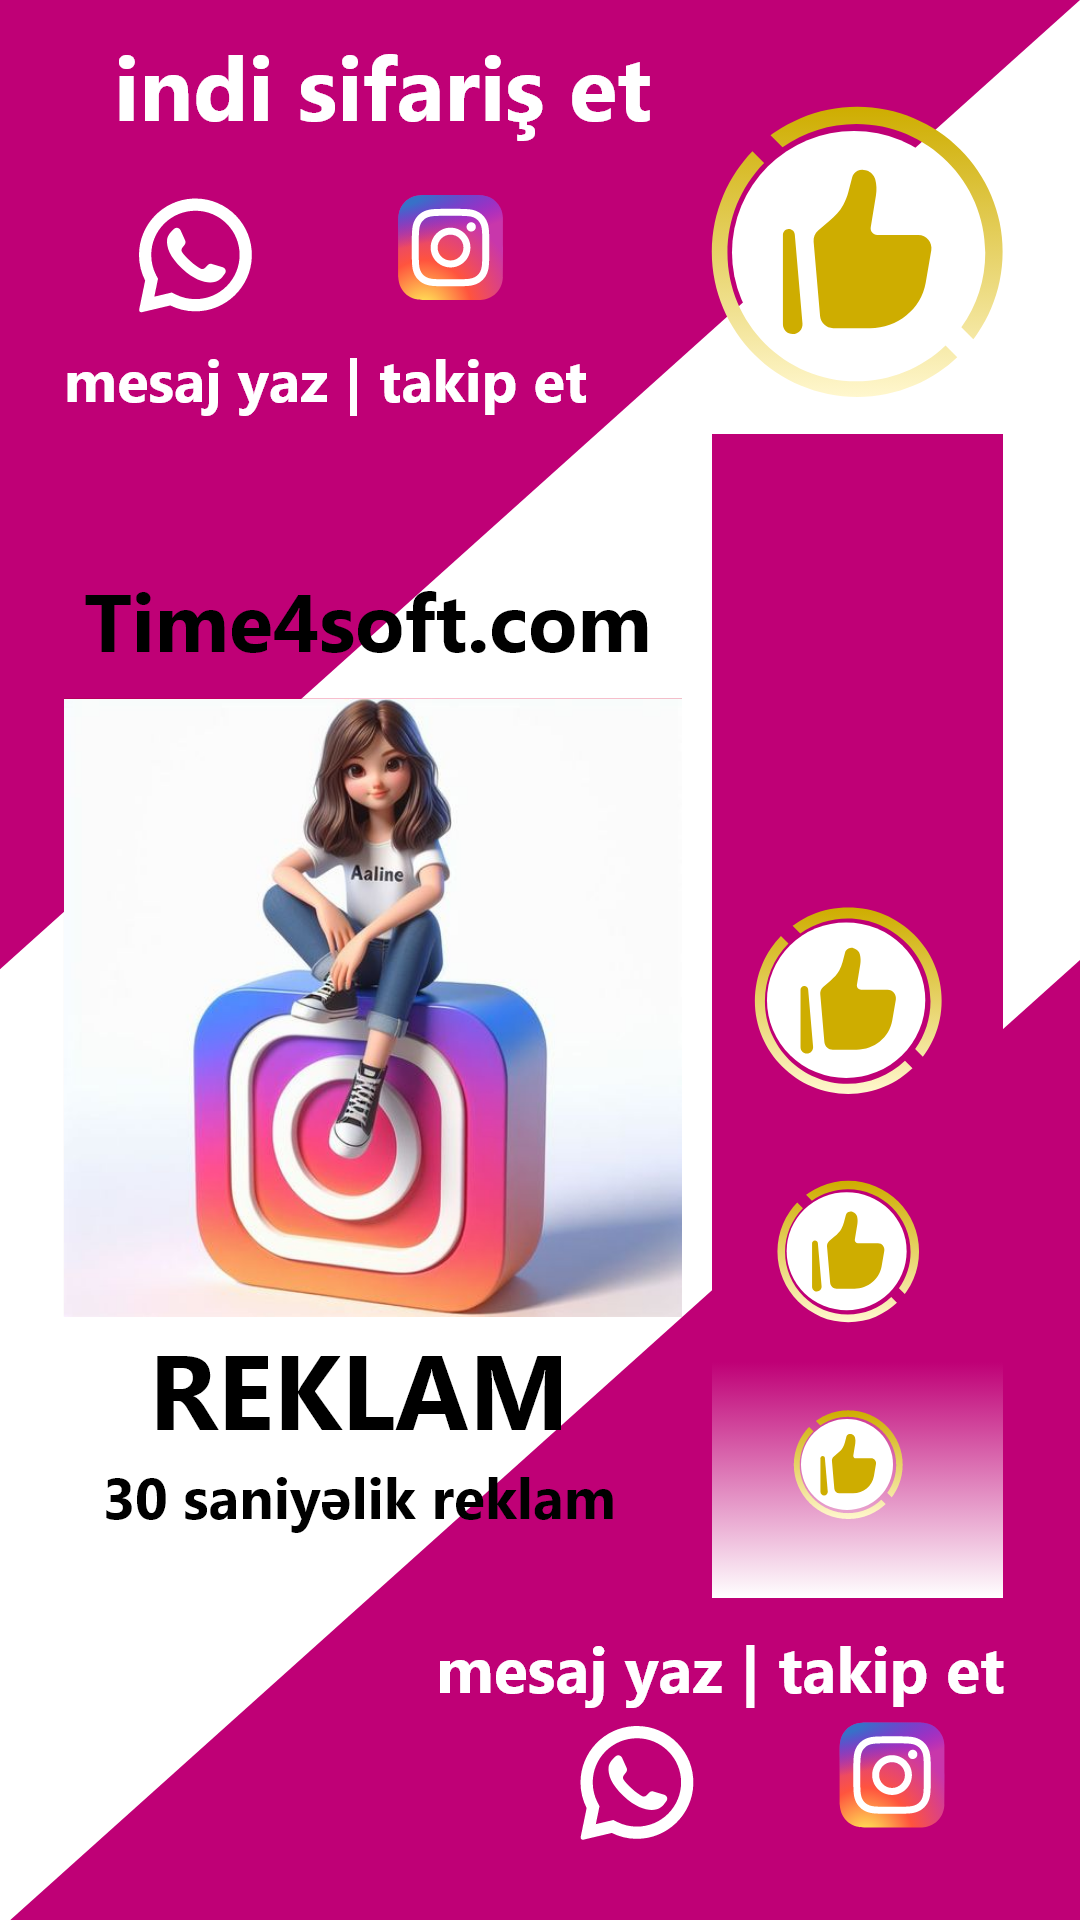 azerbaijan Azerbaycan türkiye logo Graphic Designer Social media post marketing   brand identity Advertising  design